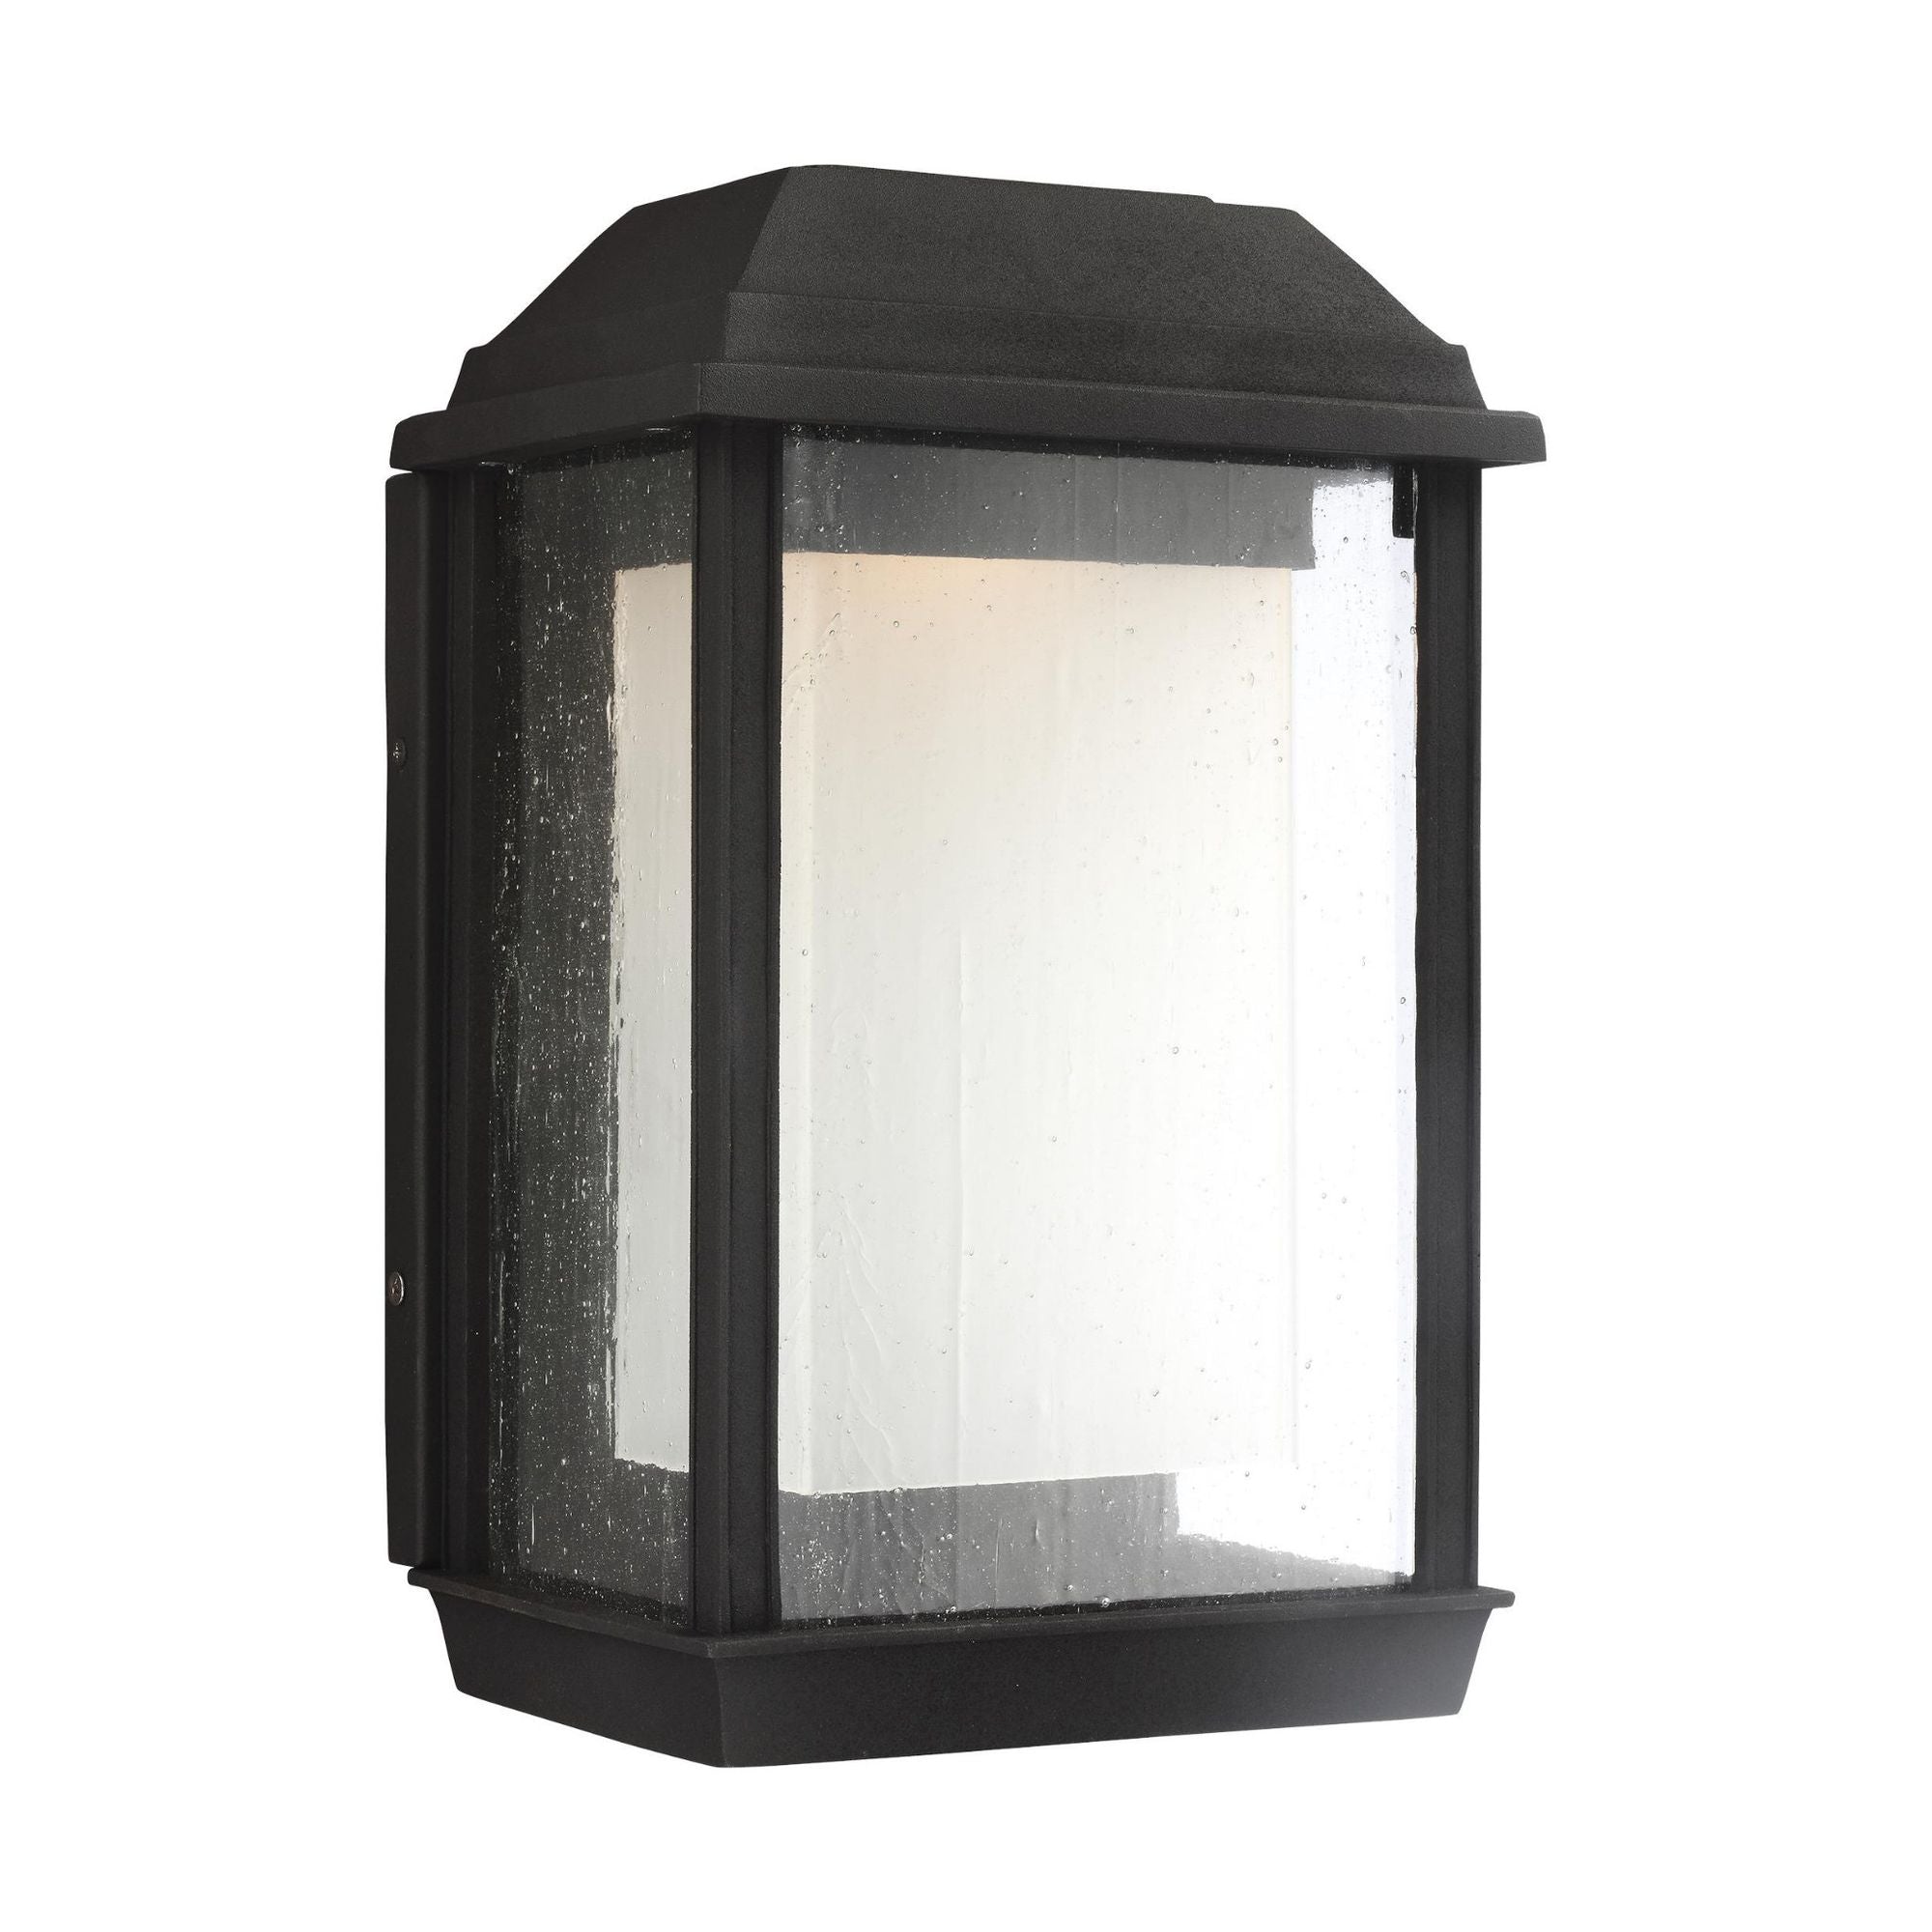 Sean Lavin McHenry Medium LED Lantern in Textured Black